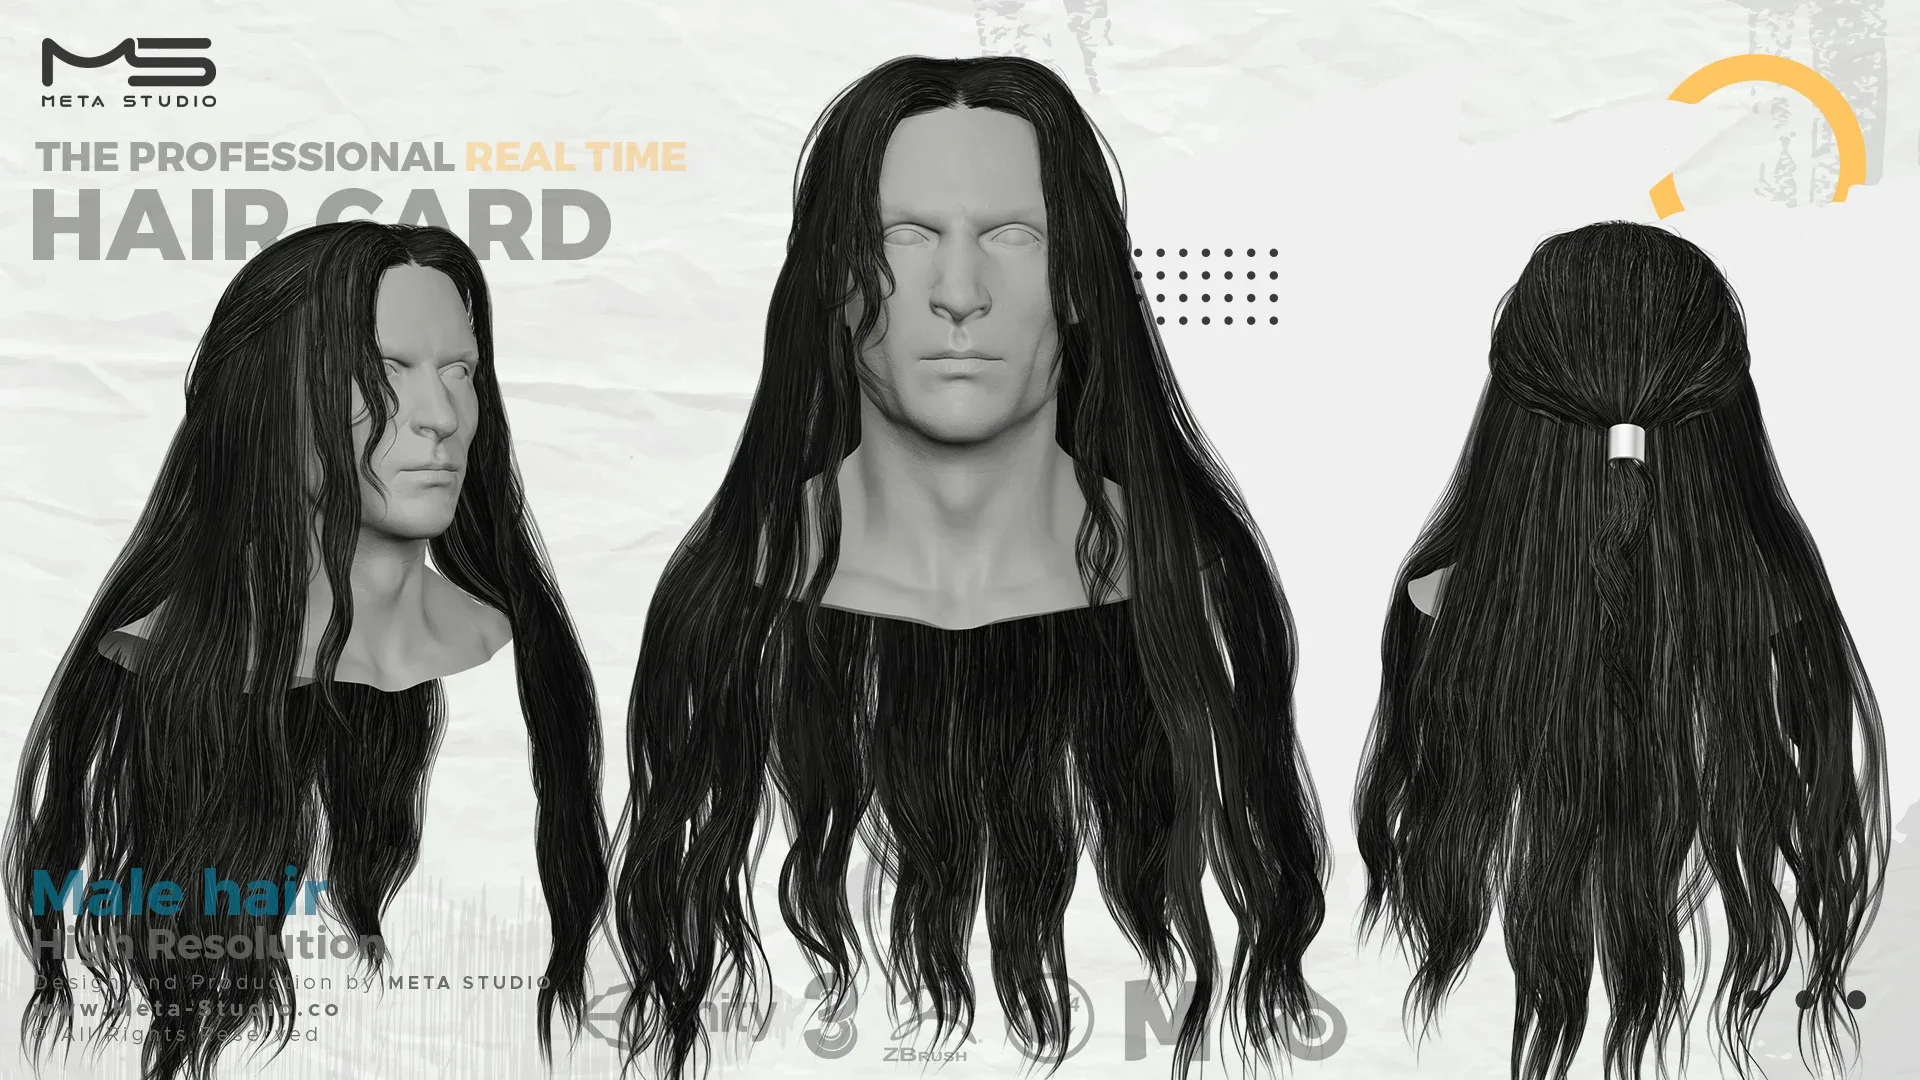 30 Male Hair (Bundle) Realtime Hair card - 50% OFF